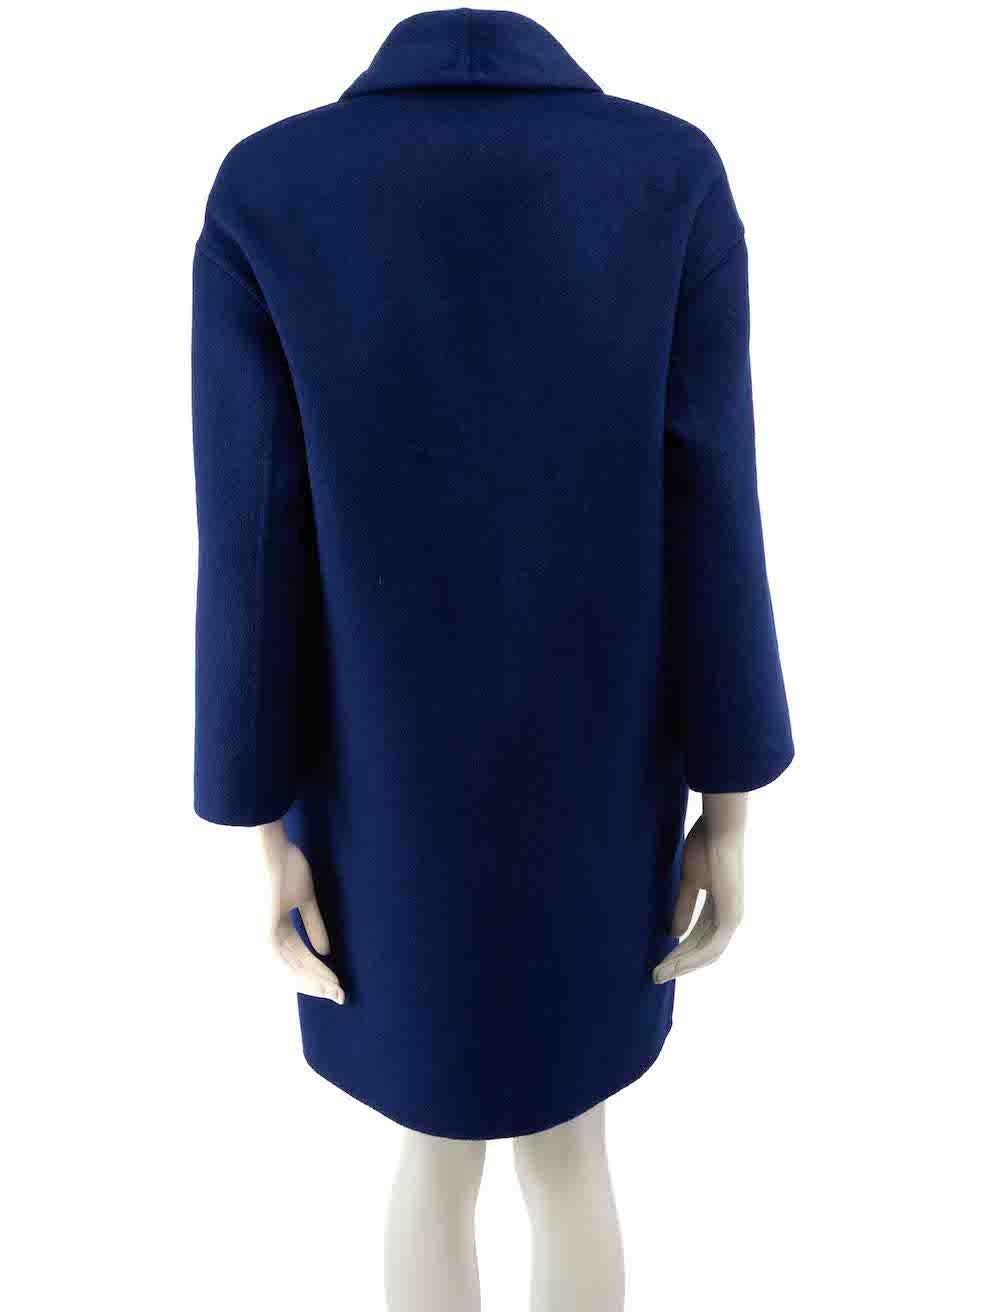 Manteau long Prada bleu roi, taille S Bon état - En vente à London, GB